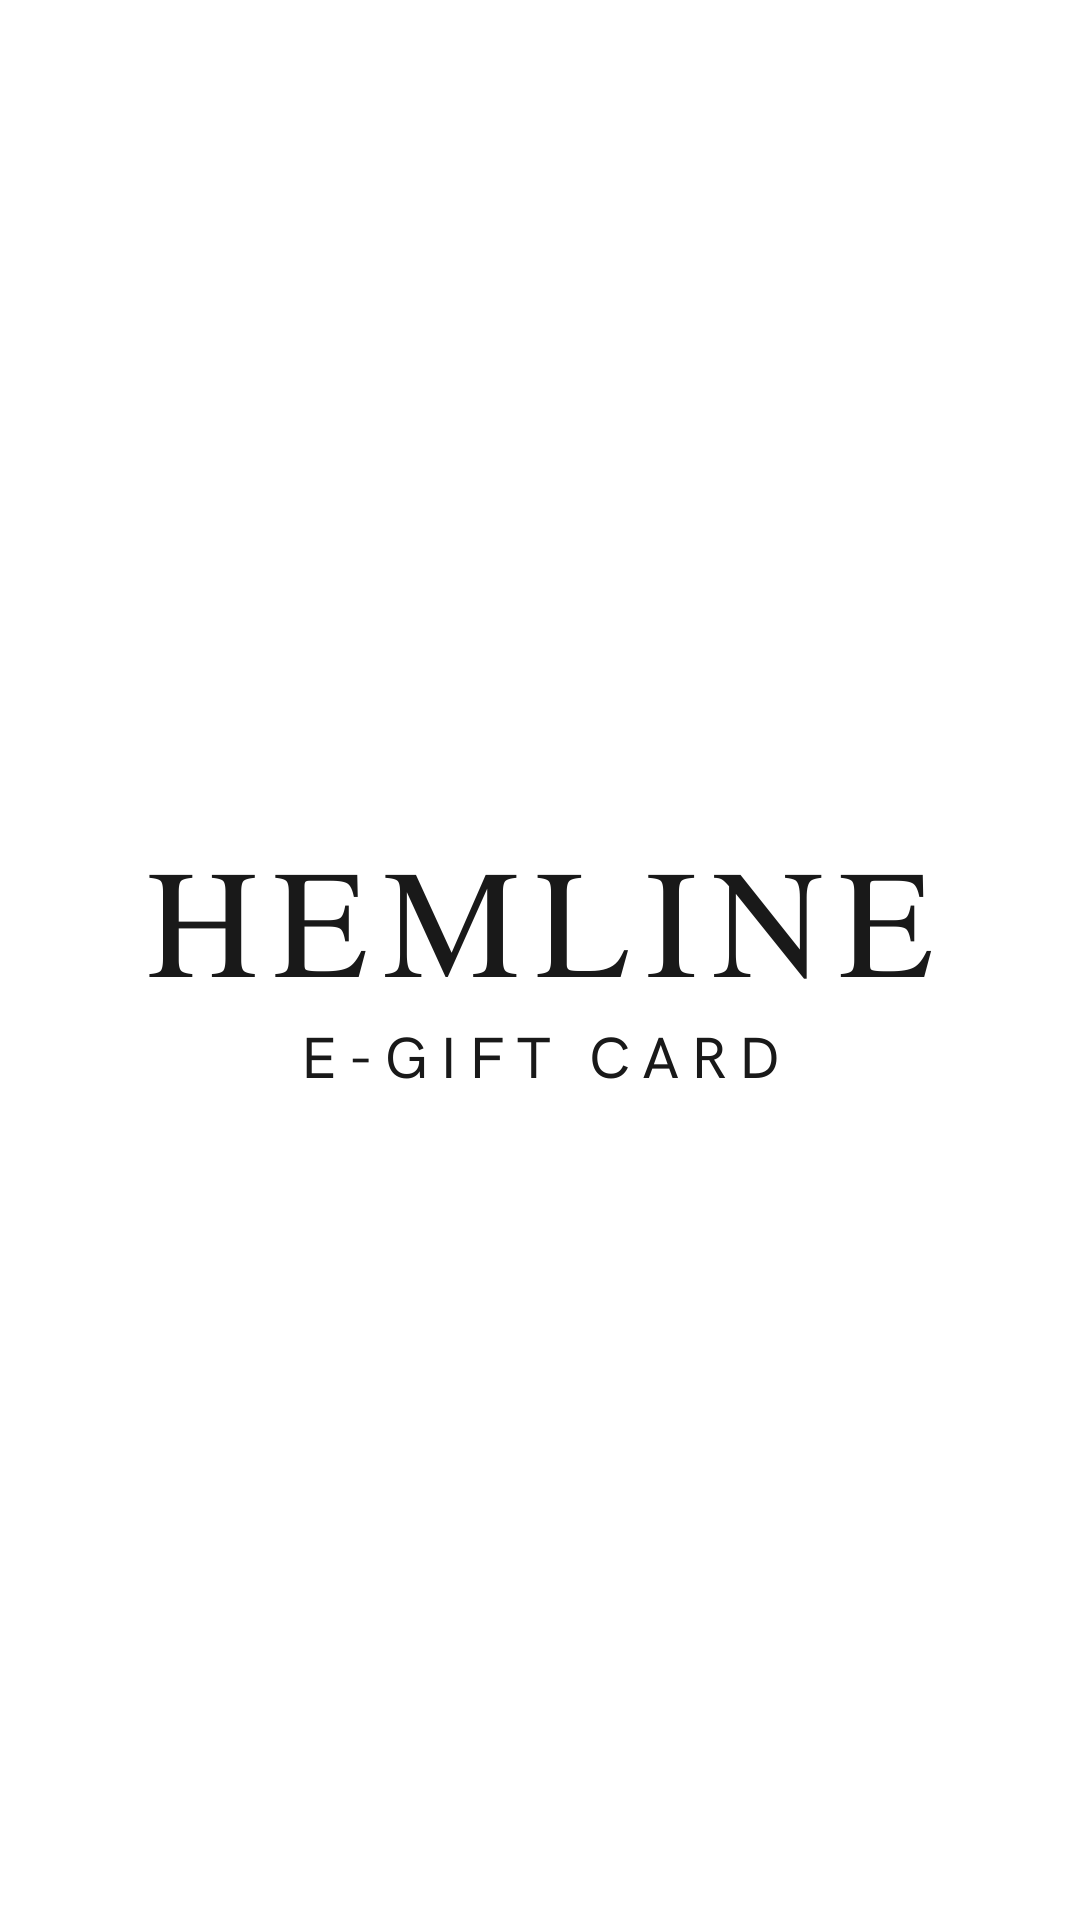 Hemline Ridgeland E-Gift Card